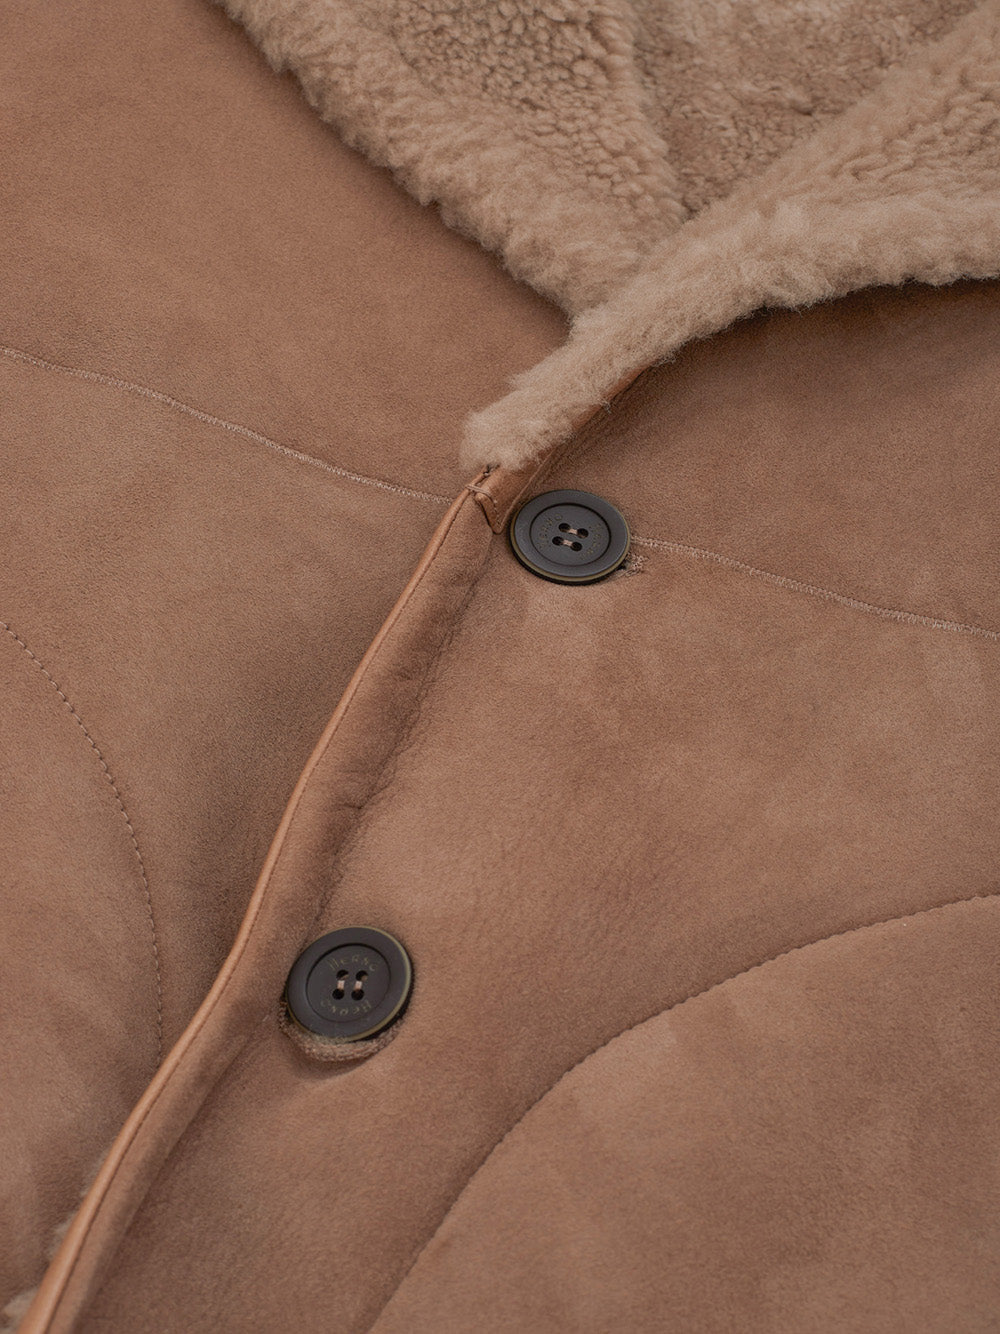 Herno Brown Sheepskin Jacket